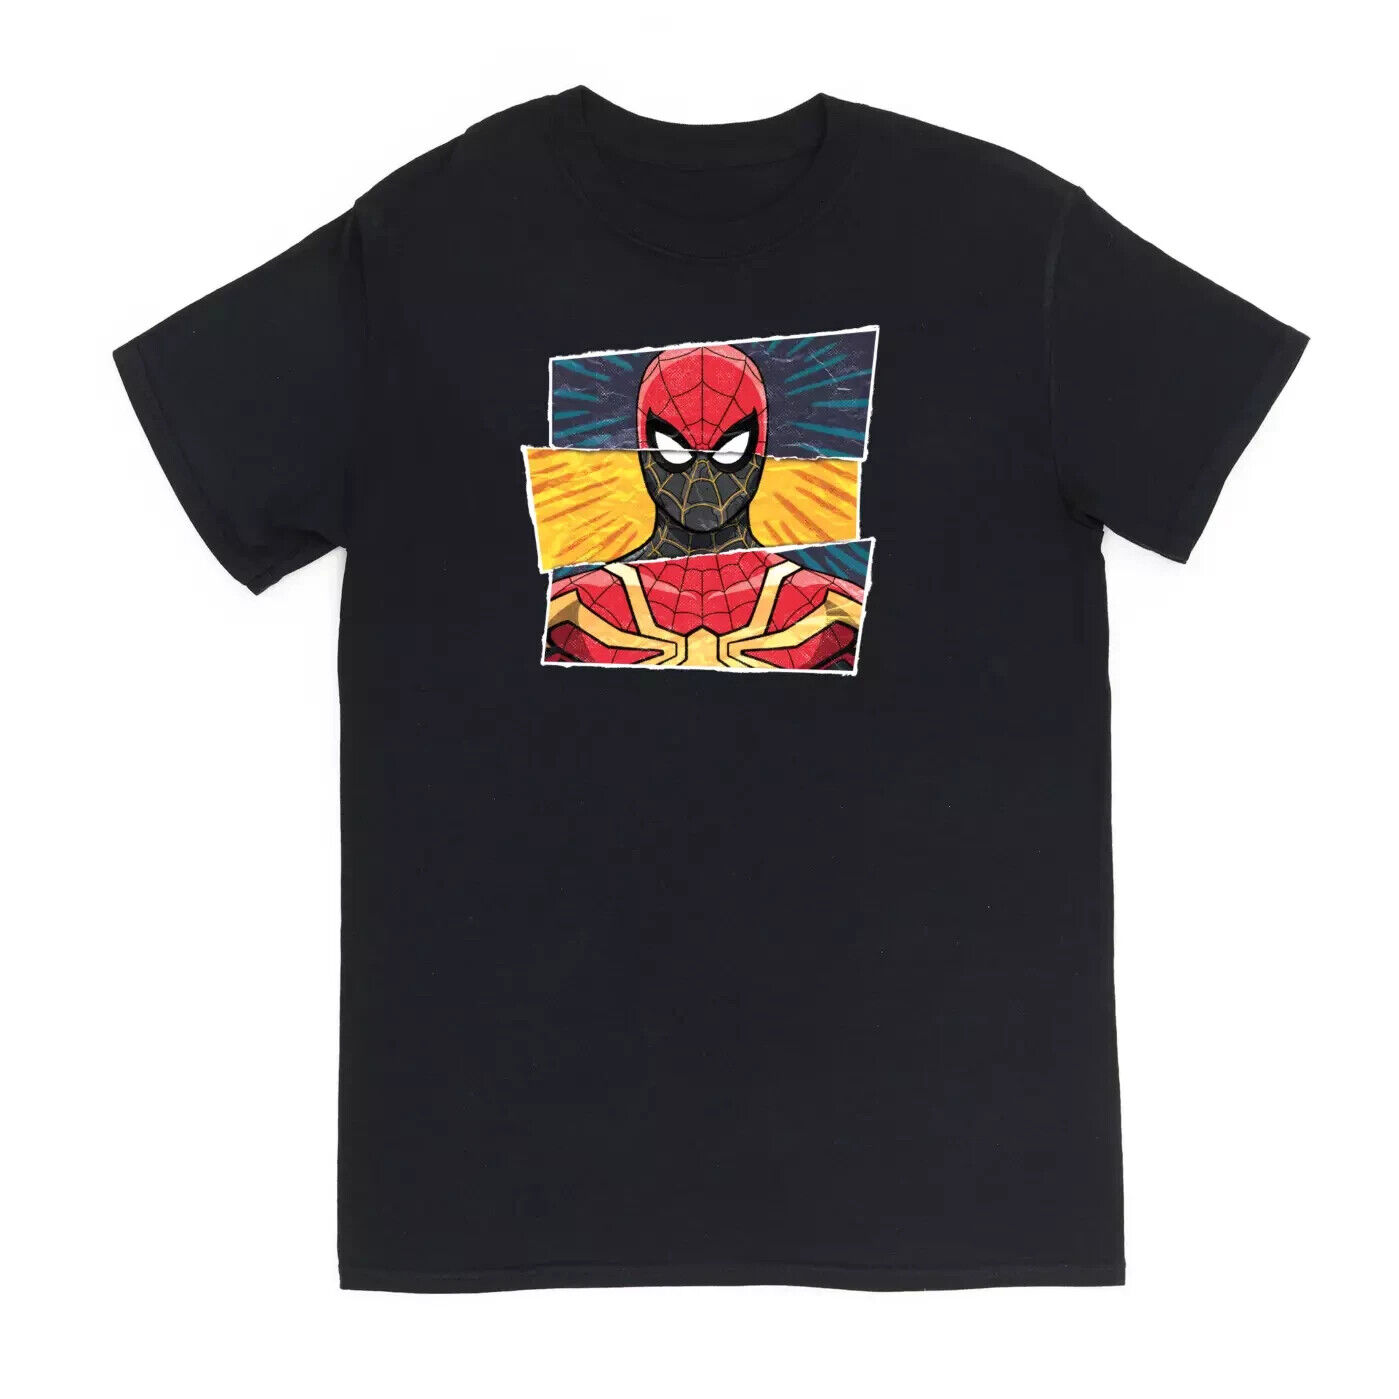 Disney Store Spider-Man Trilogy T-Shirt - Black - Marvel - Small - New